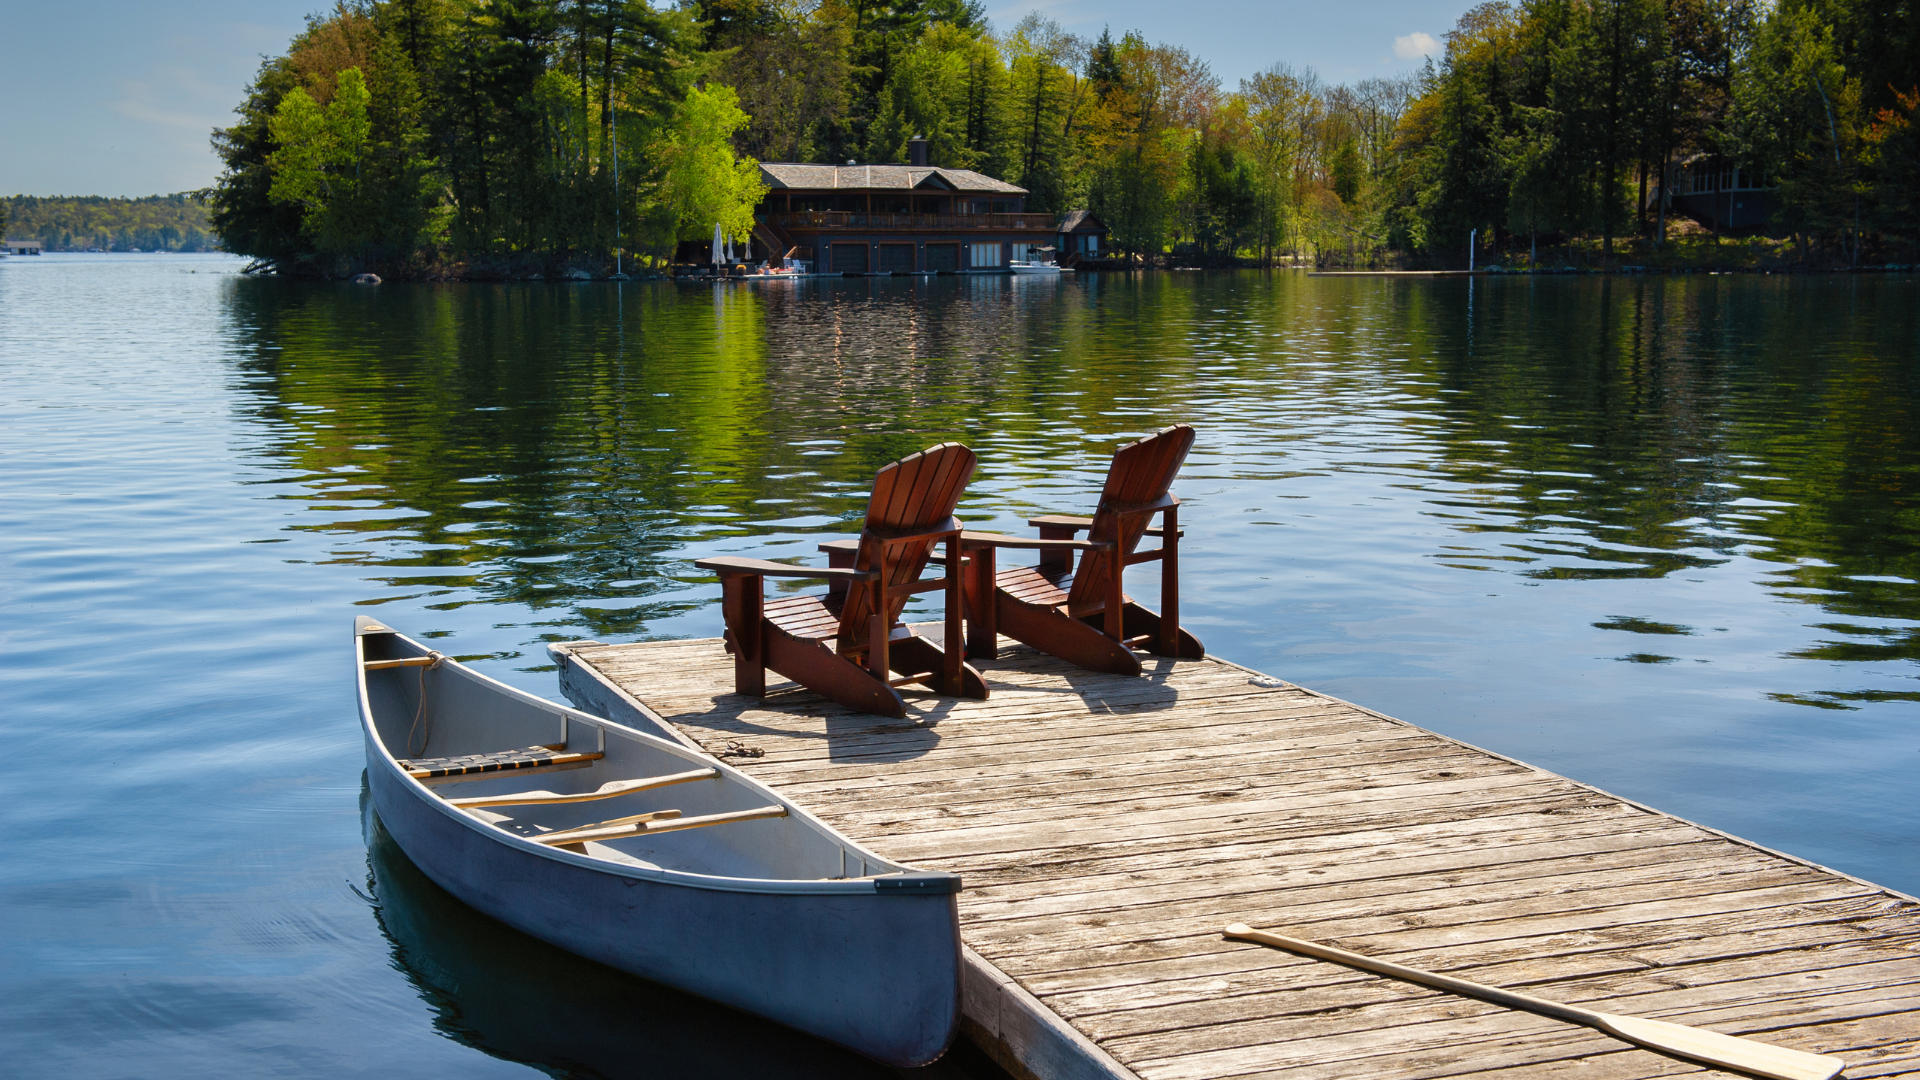 Muskoka chairs sitting on a wood dock facing a calm lake